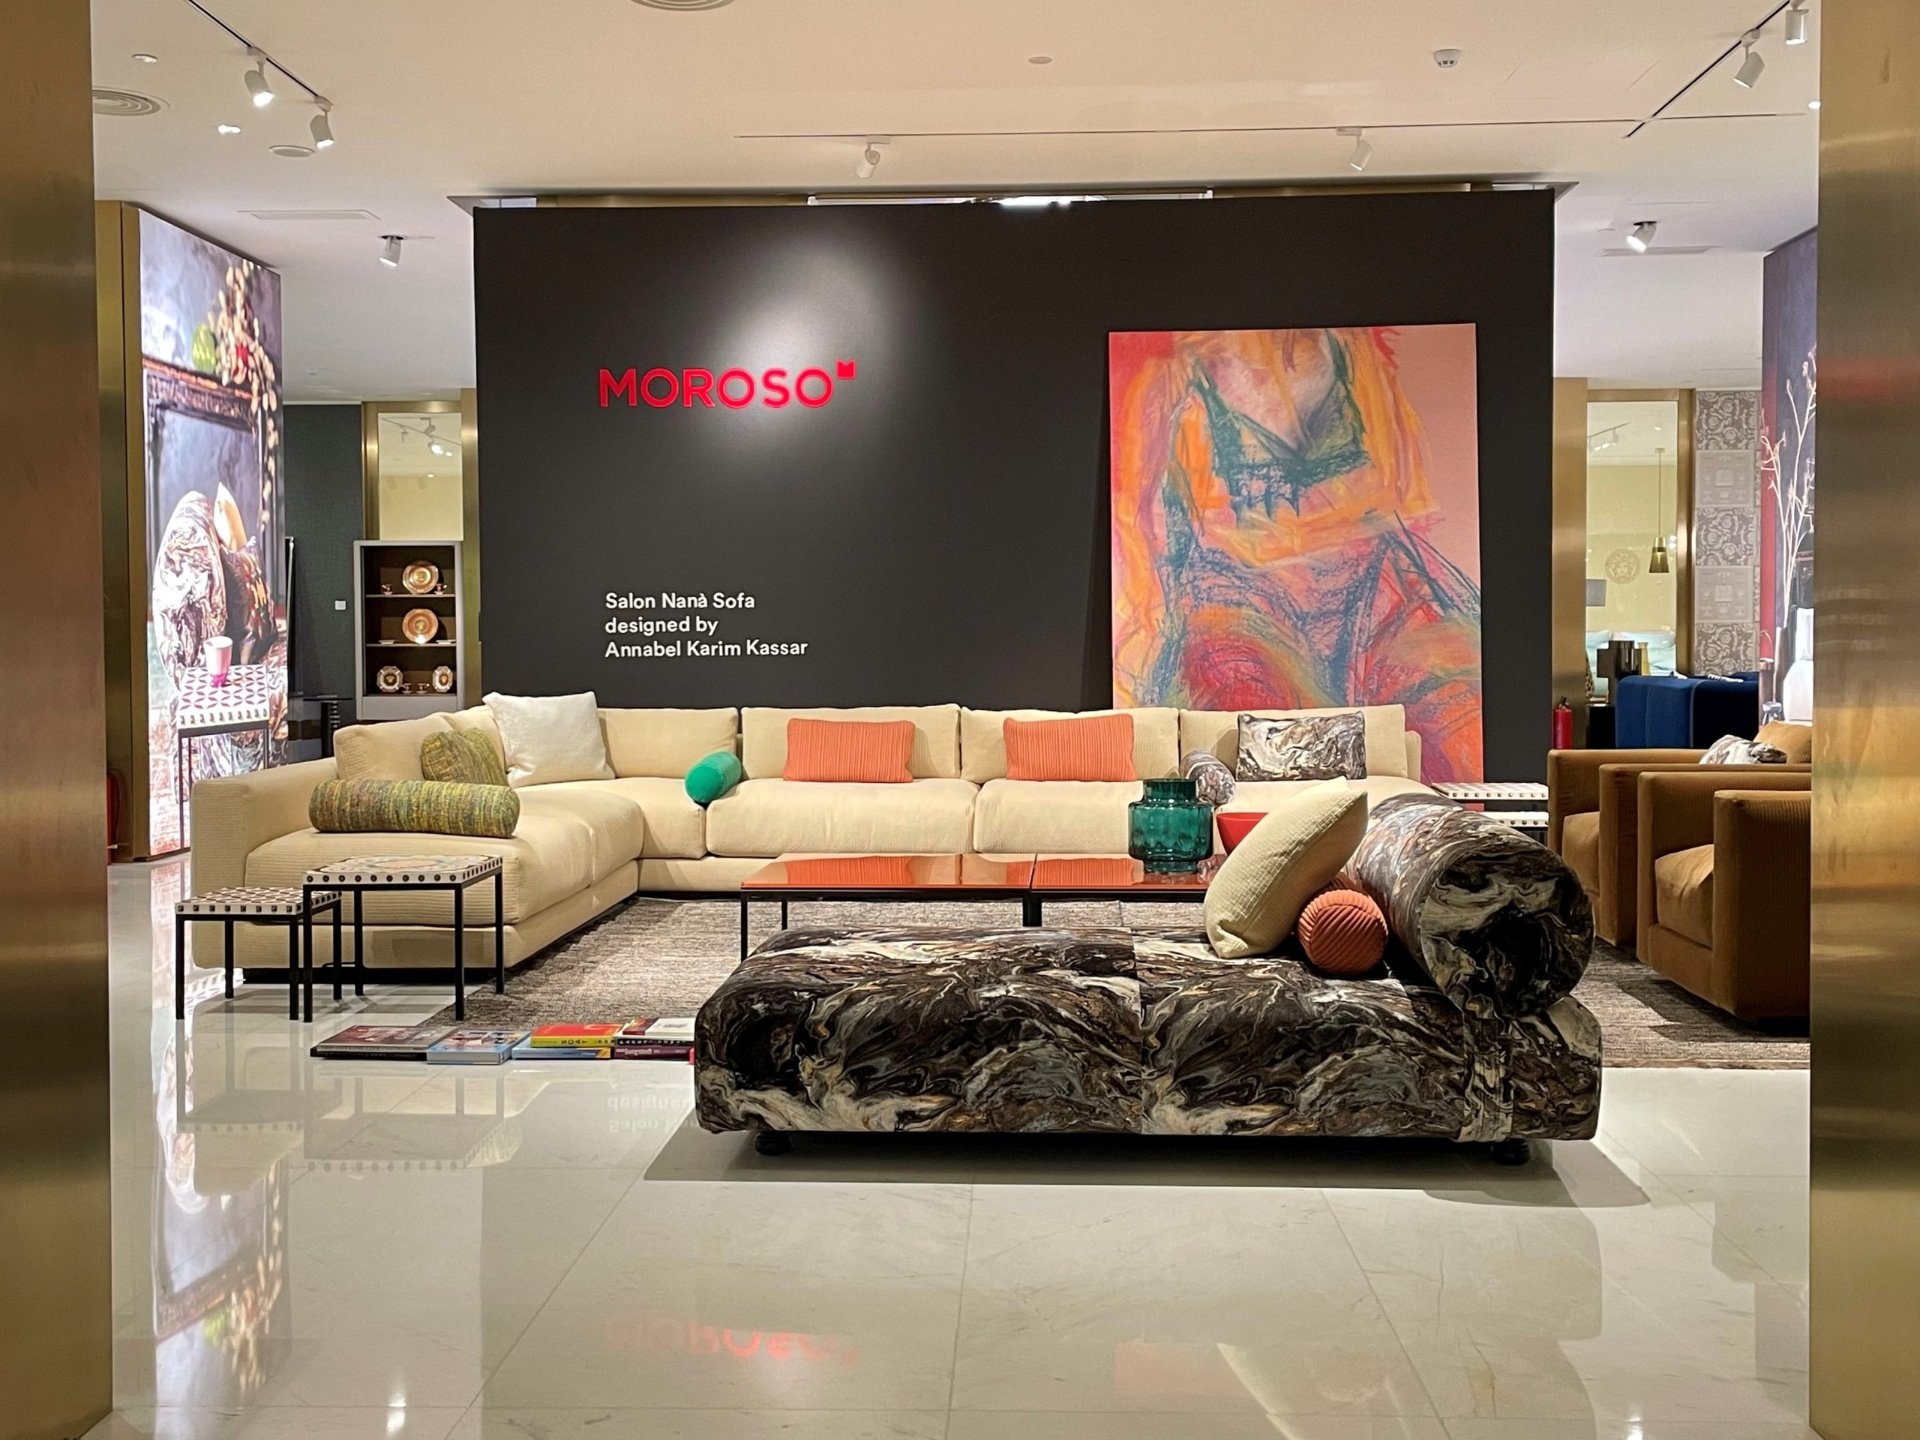 Moroso Features Patricia Urquiola Designs of 2020 and 2021 - ArchiExpo  e-Magazine